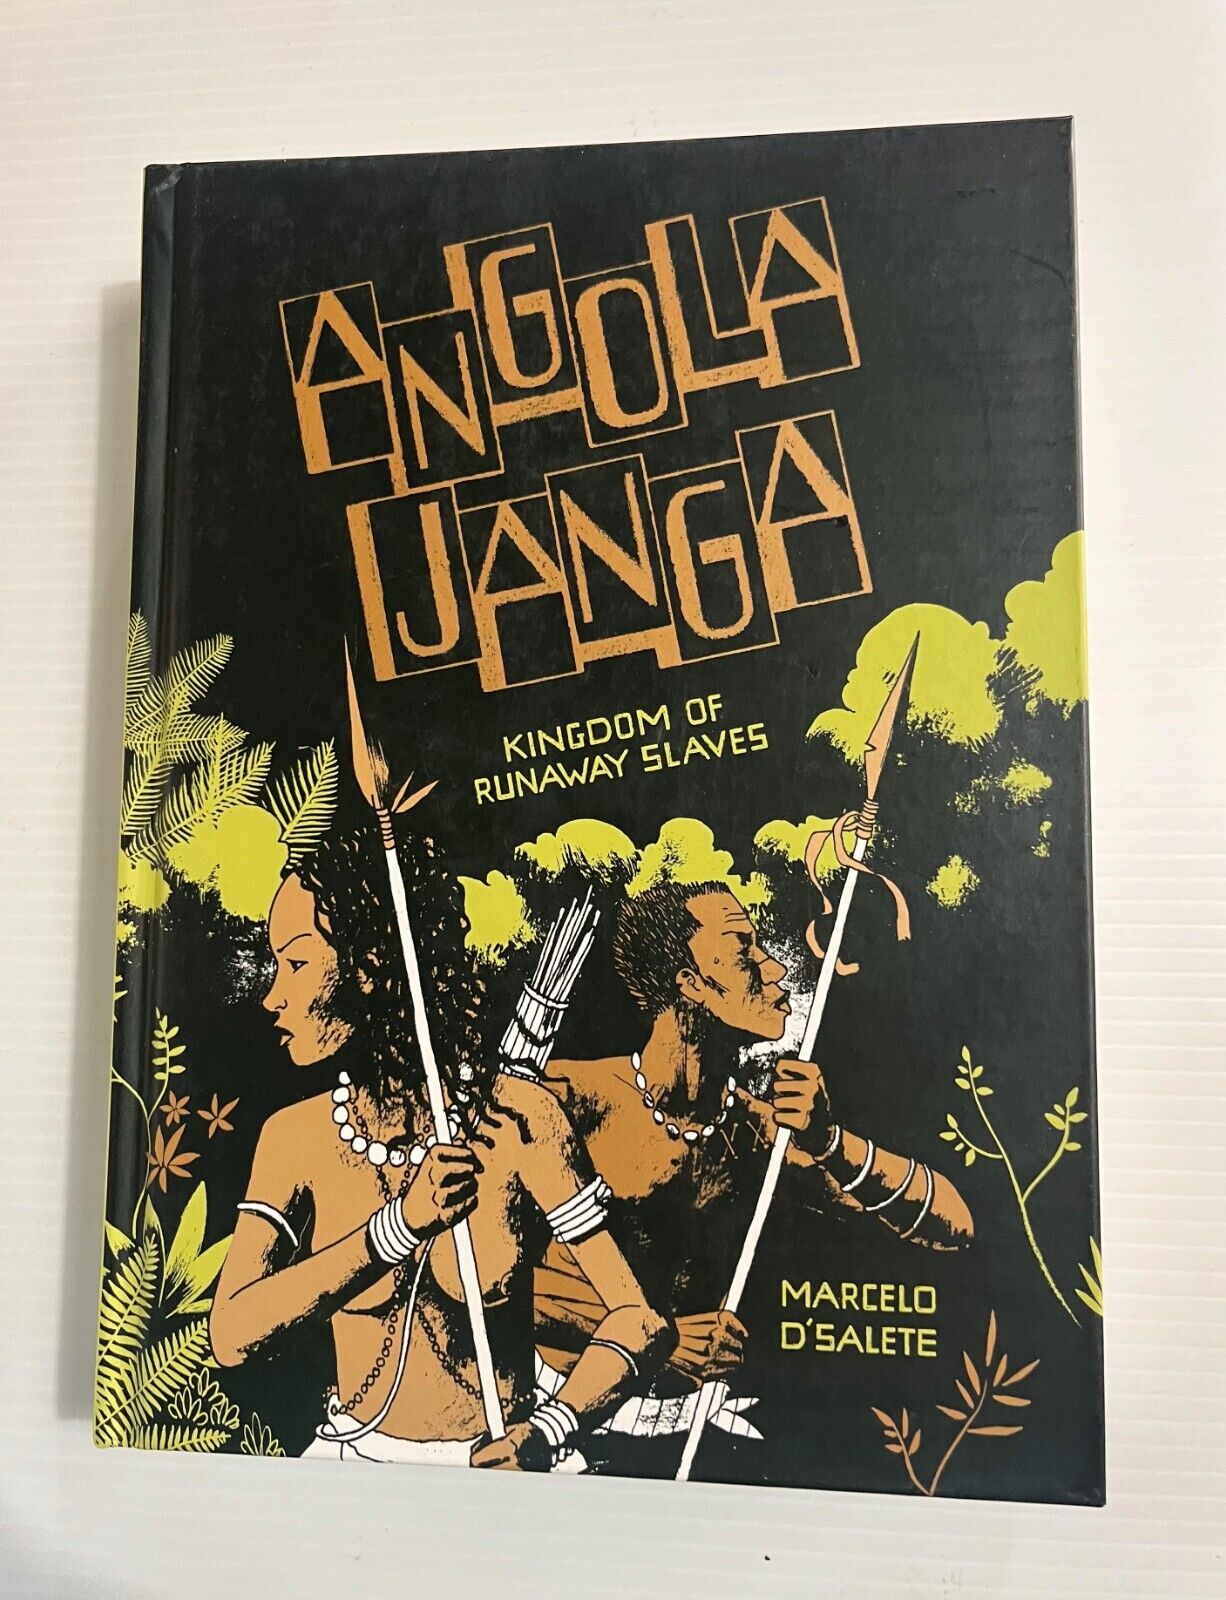 Angola Janga: Kingdom of Runaway Slaves Hardcover Marcelo D'Salete